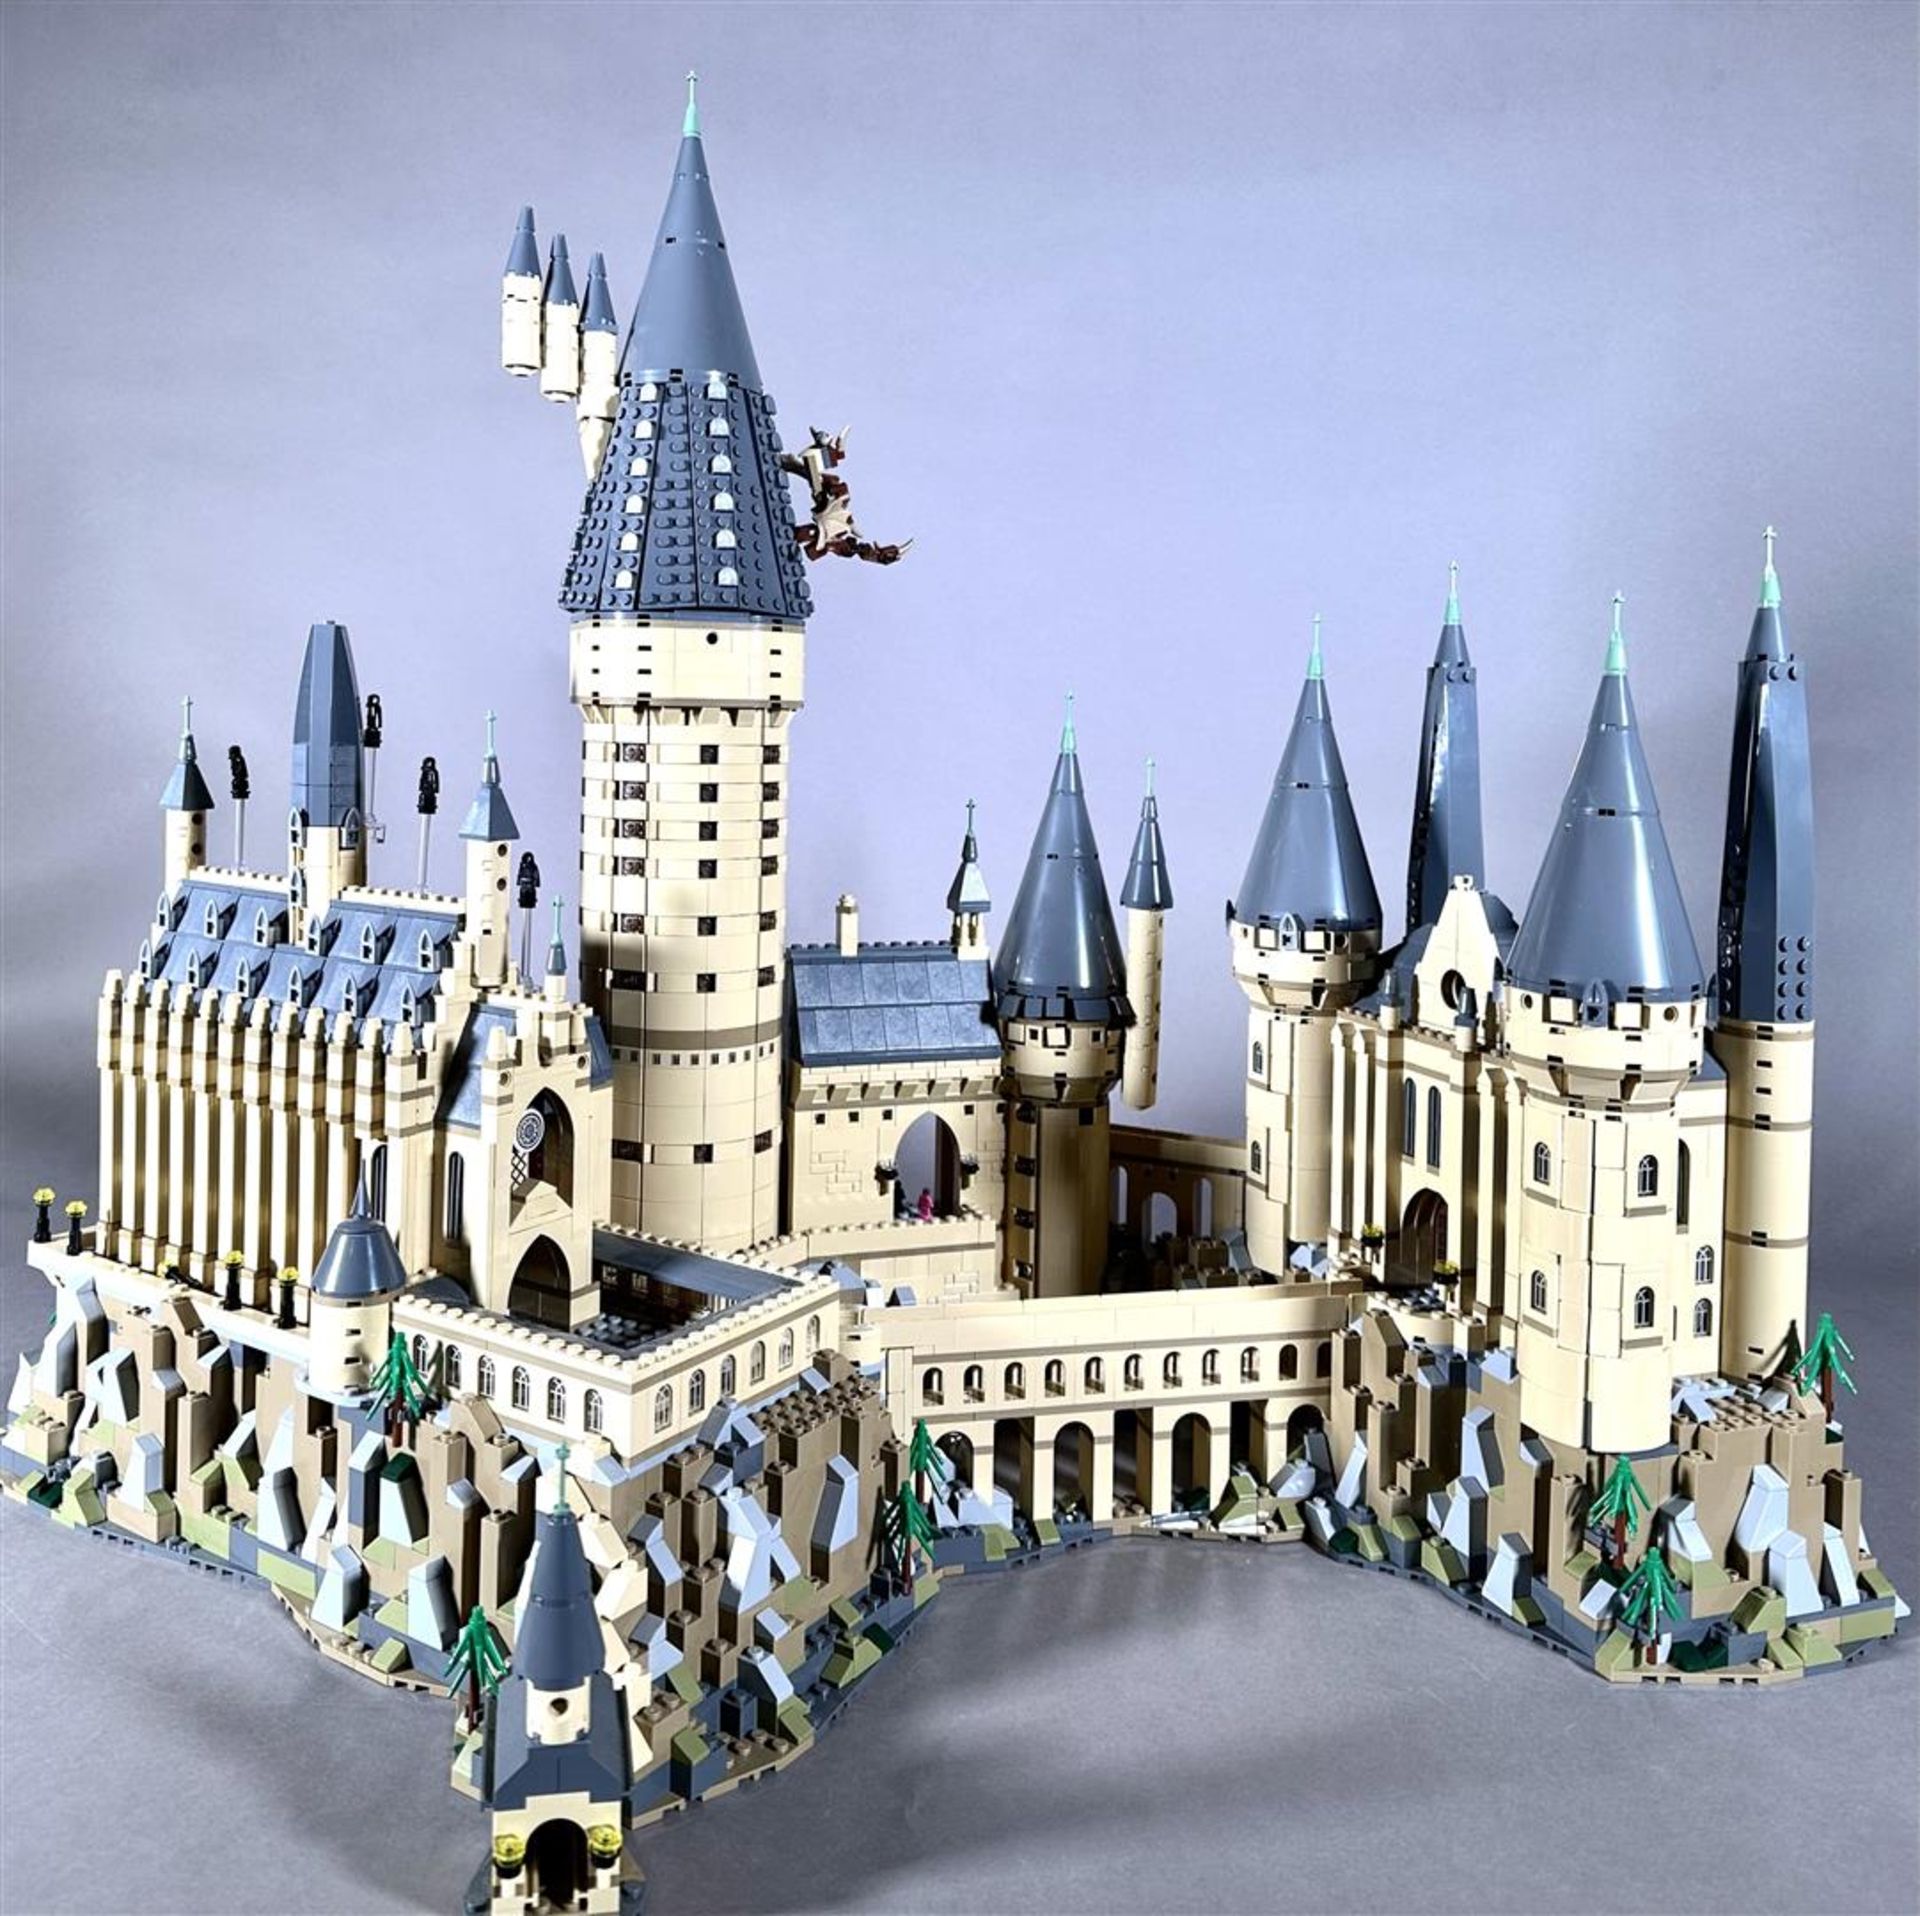 Lego - Harry Potter - 71043 - Hogwarts CastleLego - Harry Potter -Hogwarts Castle - 2000-present - Image 2 of 4